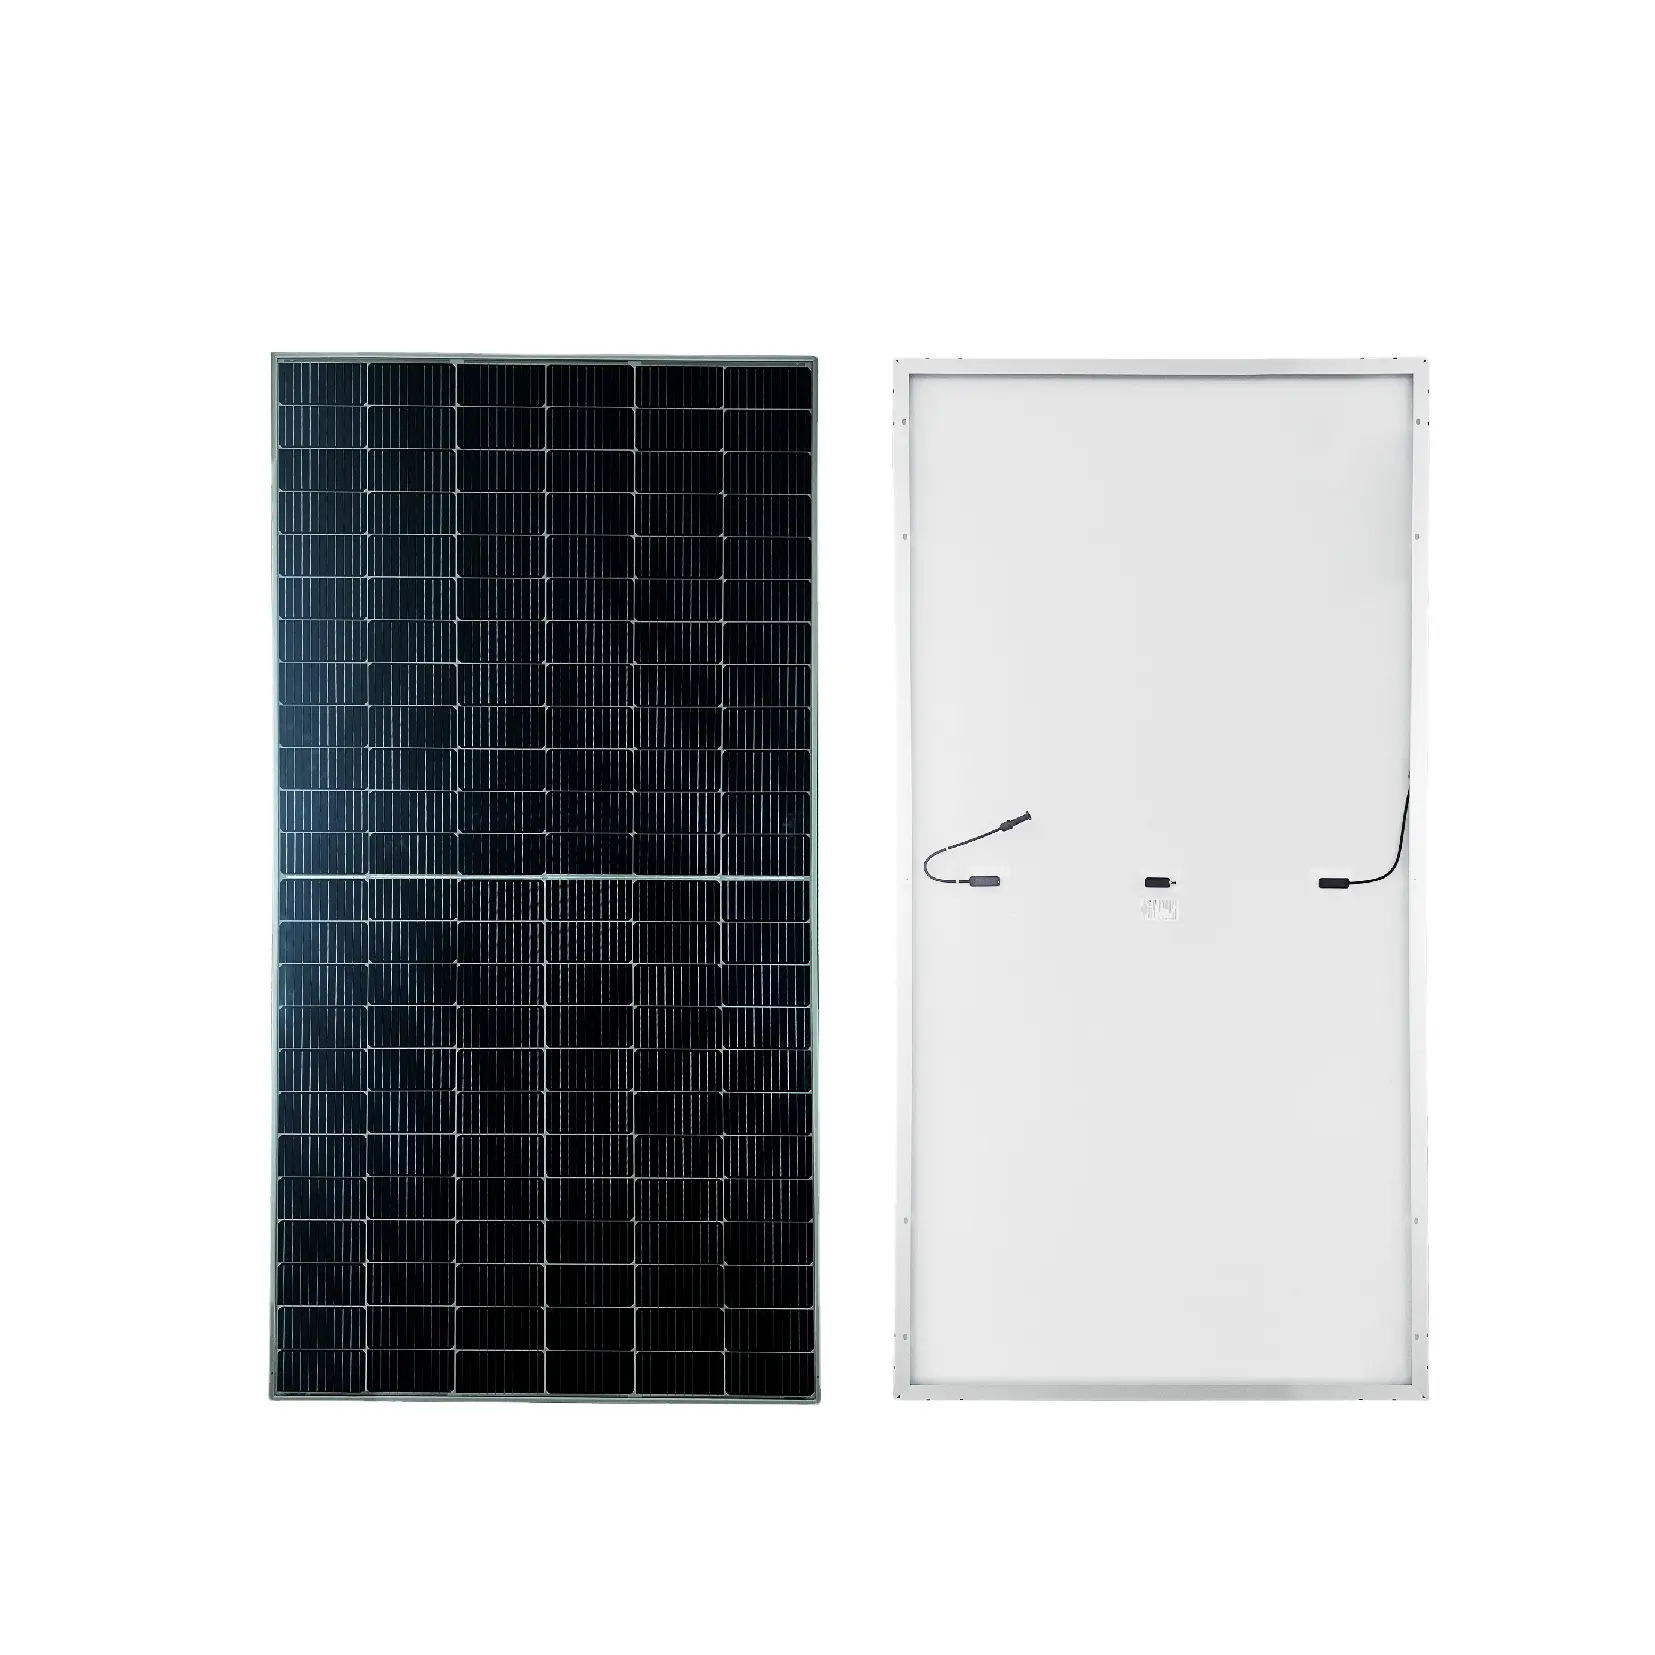 Painel solar único preço do painel solar de 500w